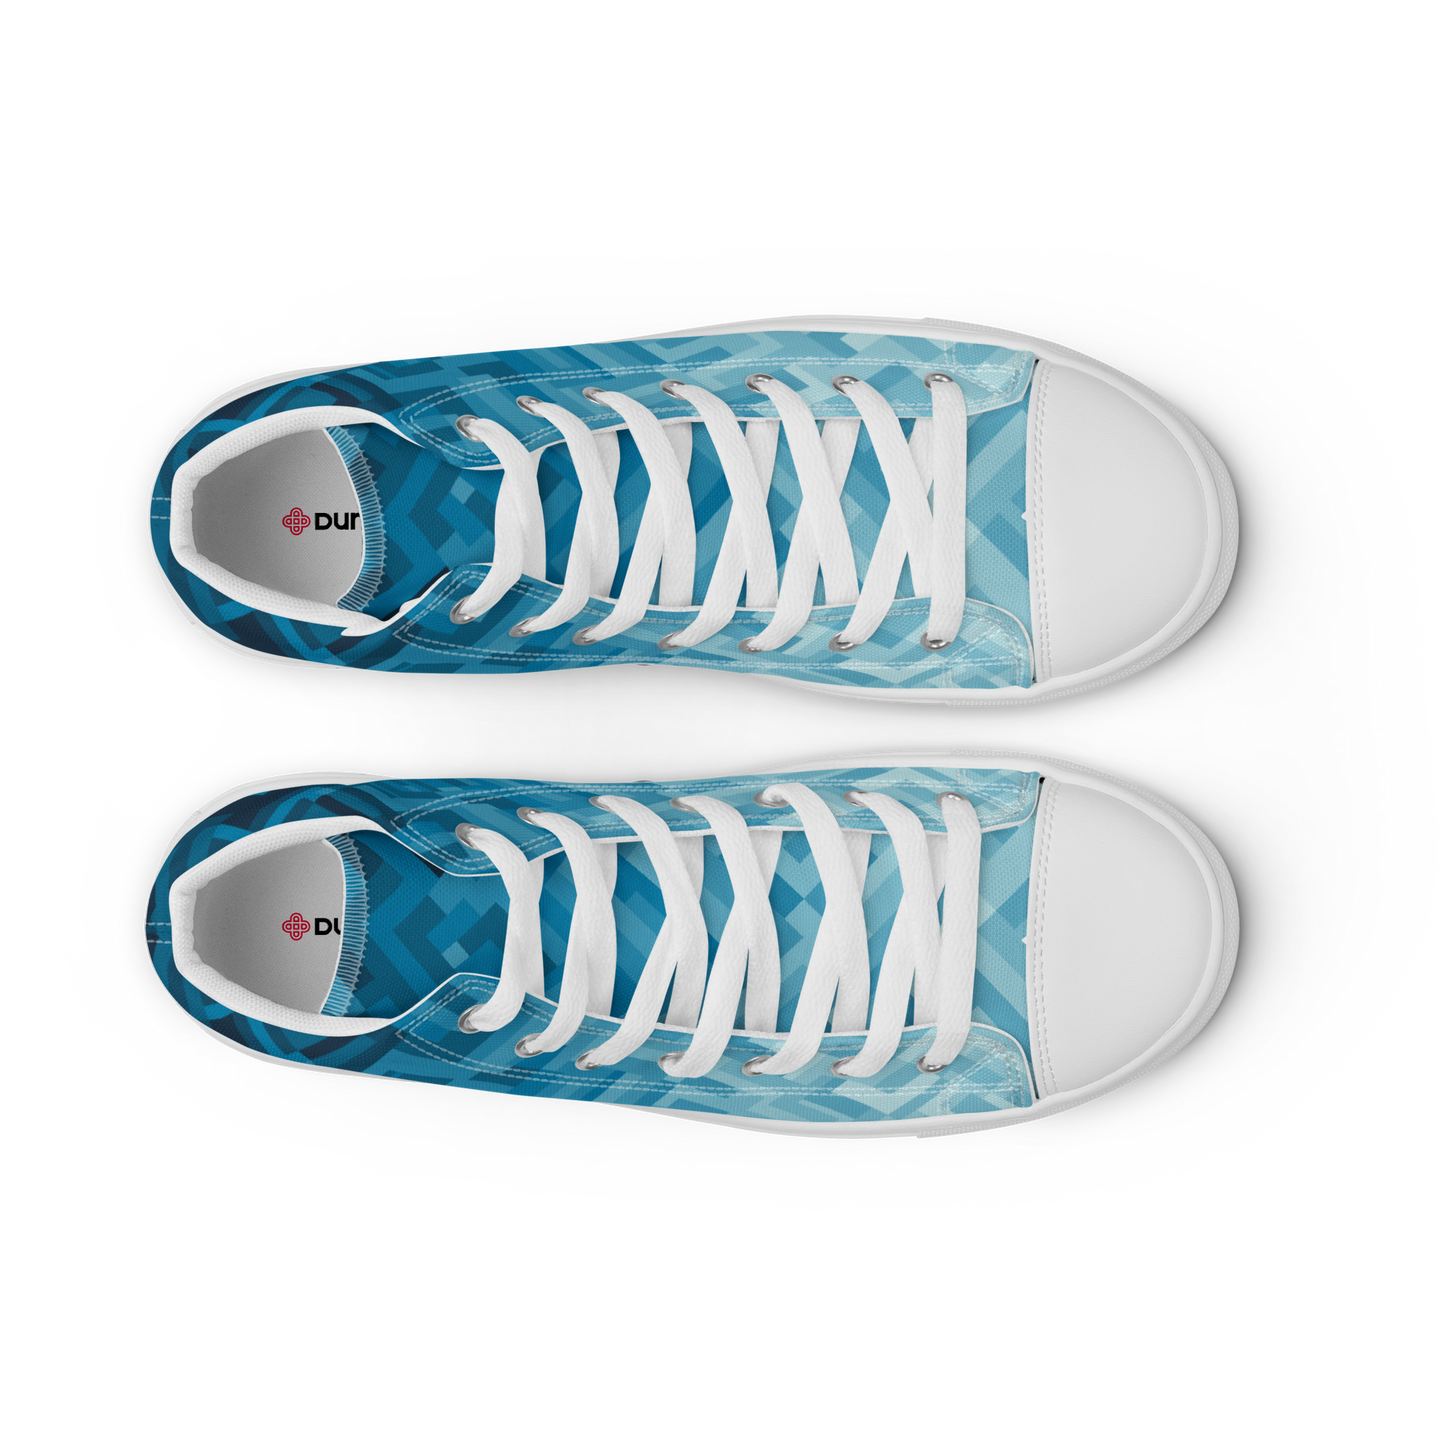 Men's Canvas Sneakers ❯ Polygonal Gradient ❯ Celestial Blue